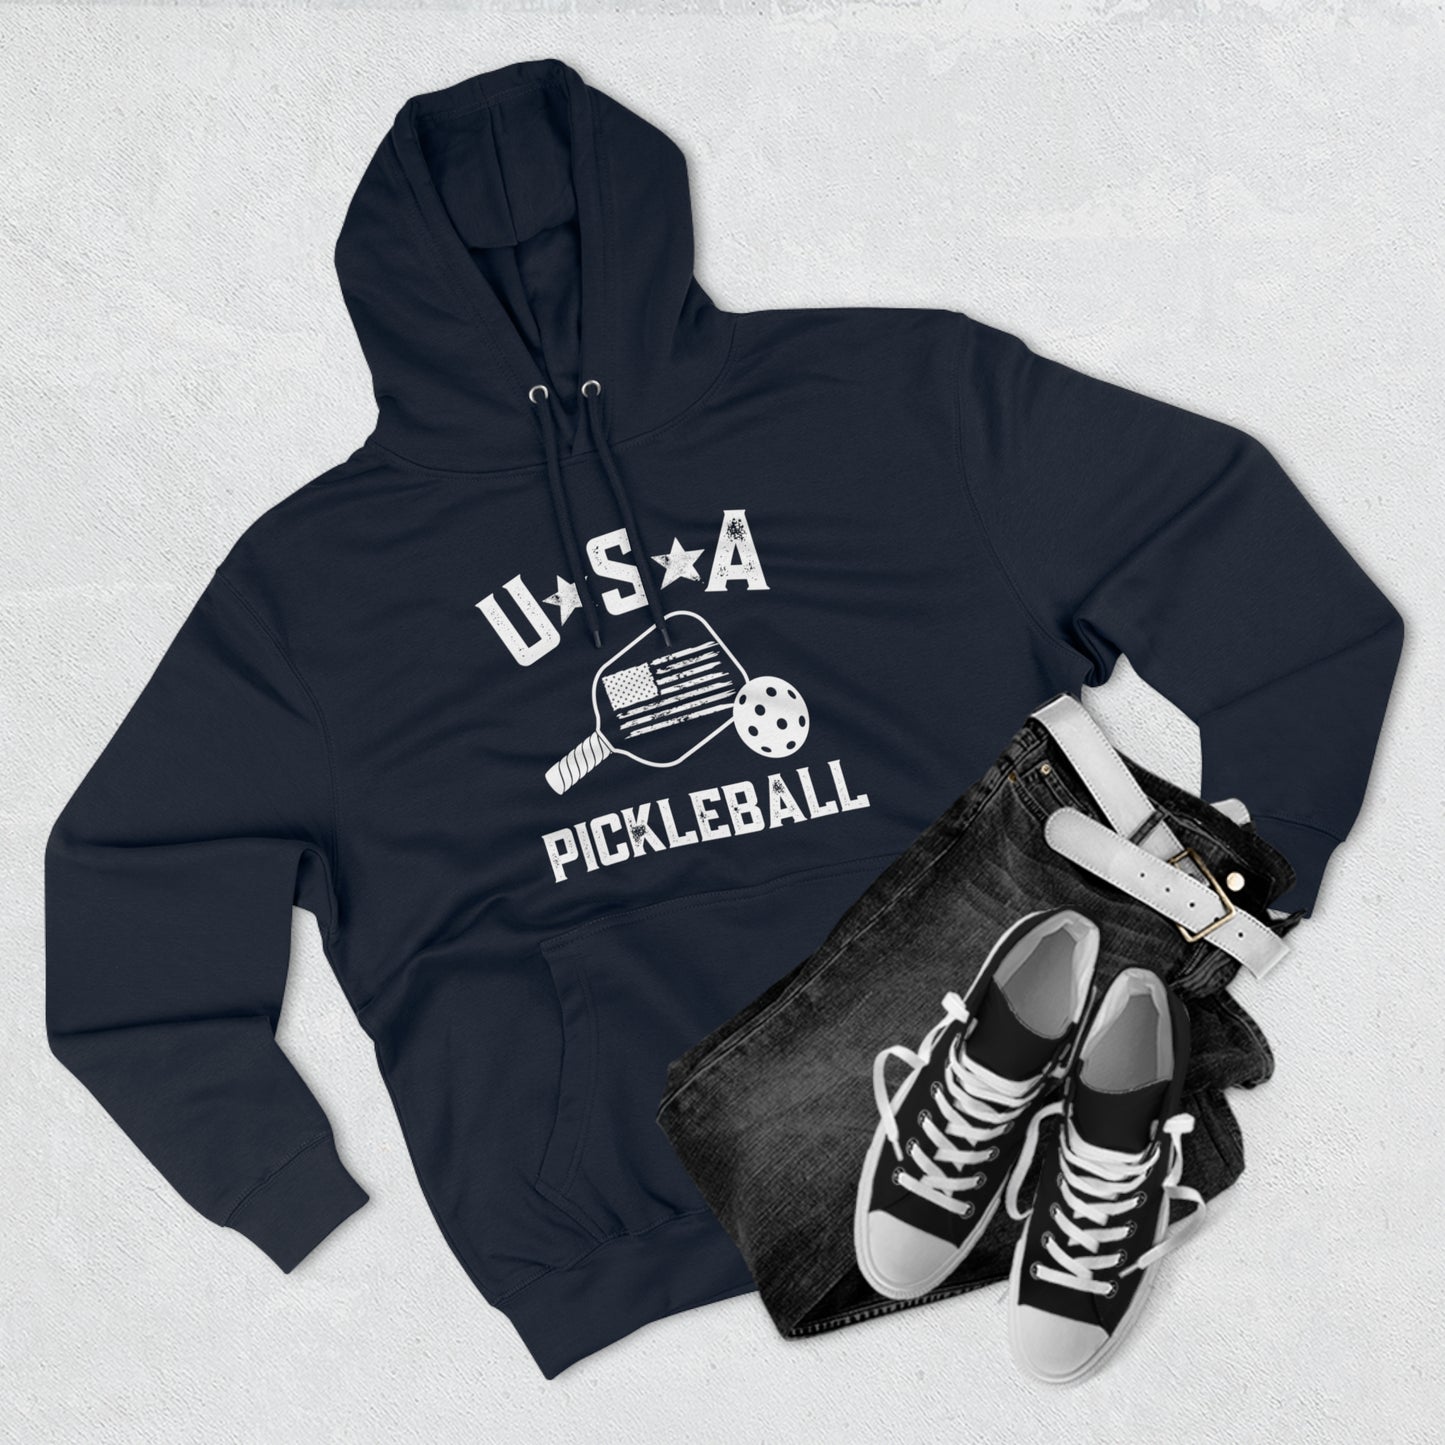 USA Pickleball - Unisex Premium Pullover Hoodie